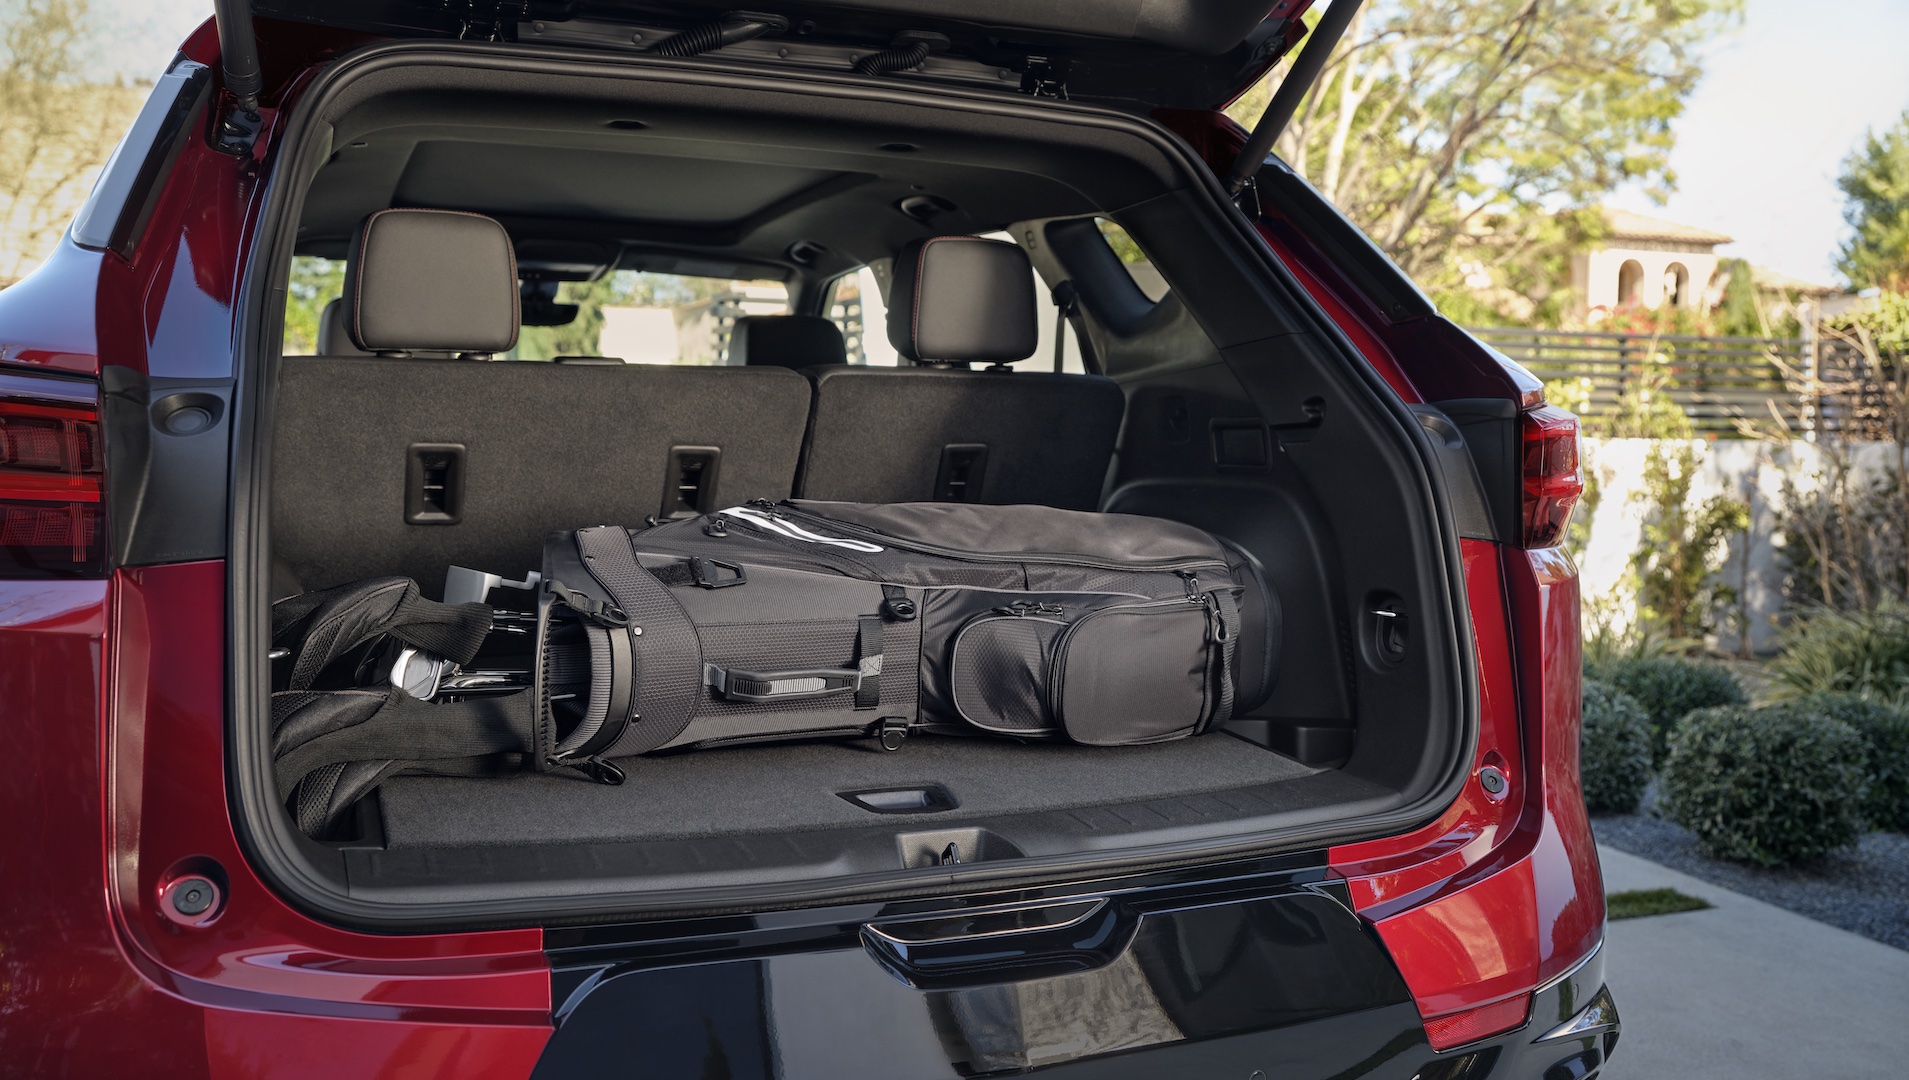 Chevy Blazer - Cargo Space (golf clubs in trunk)